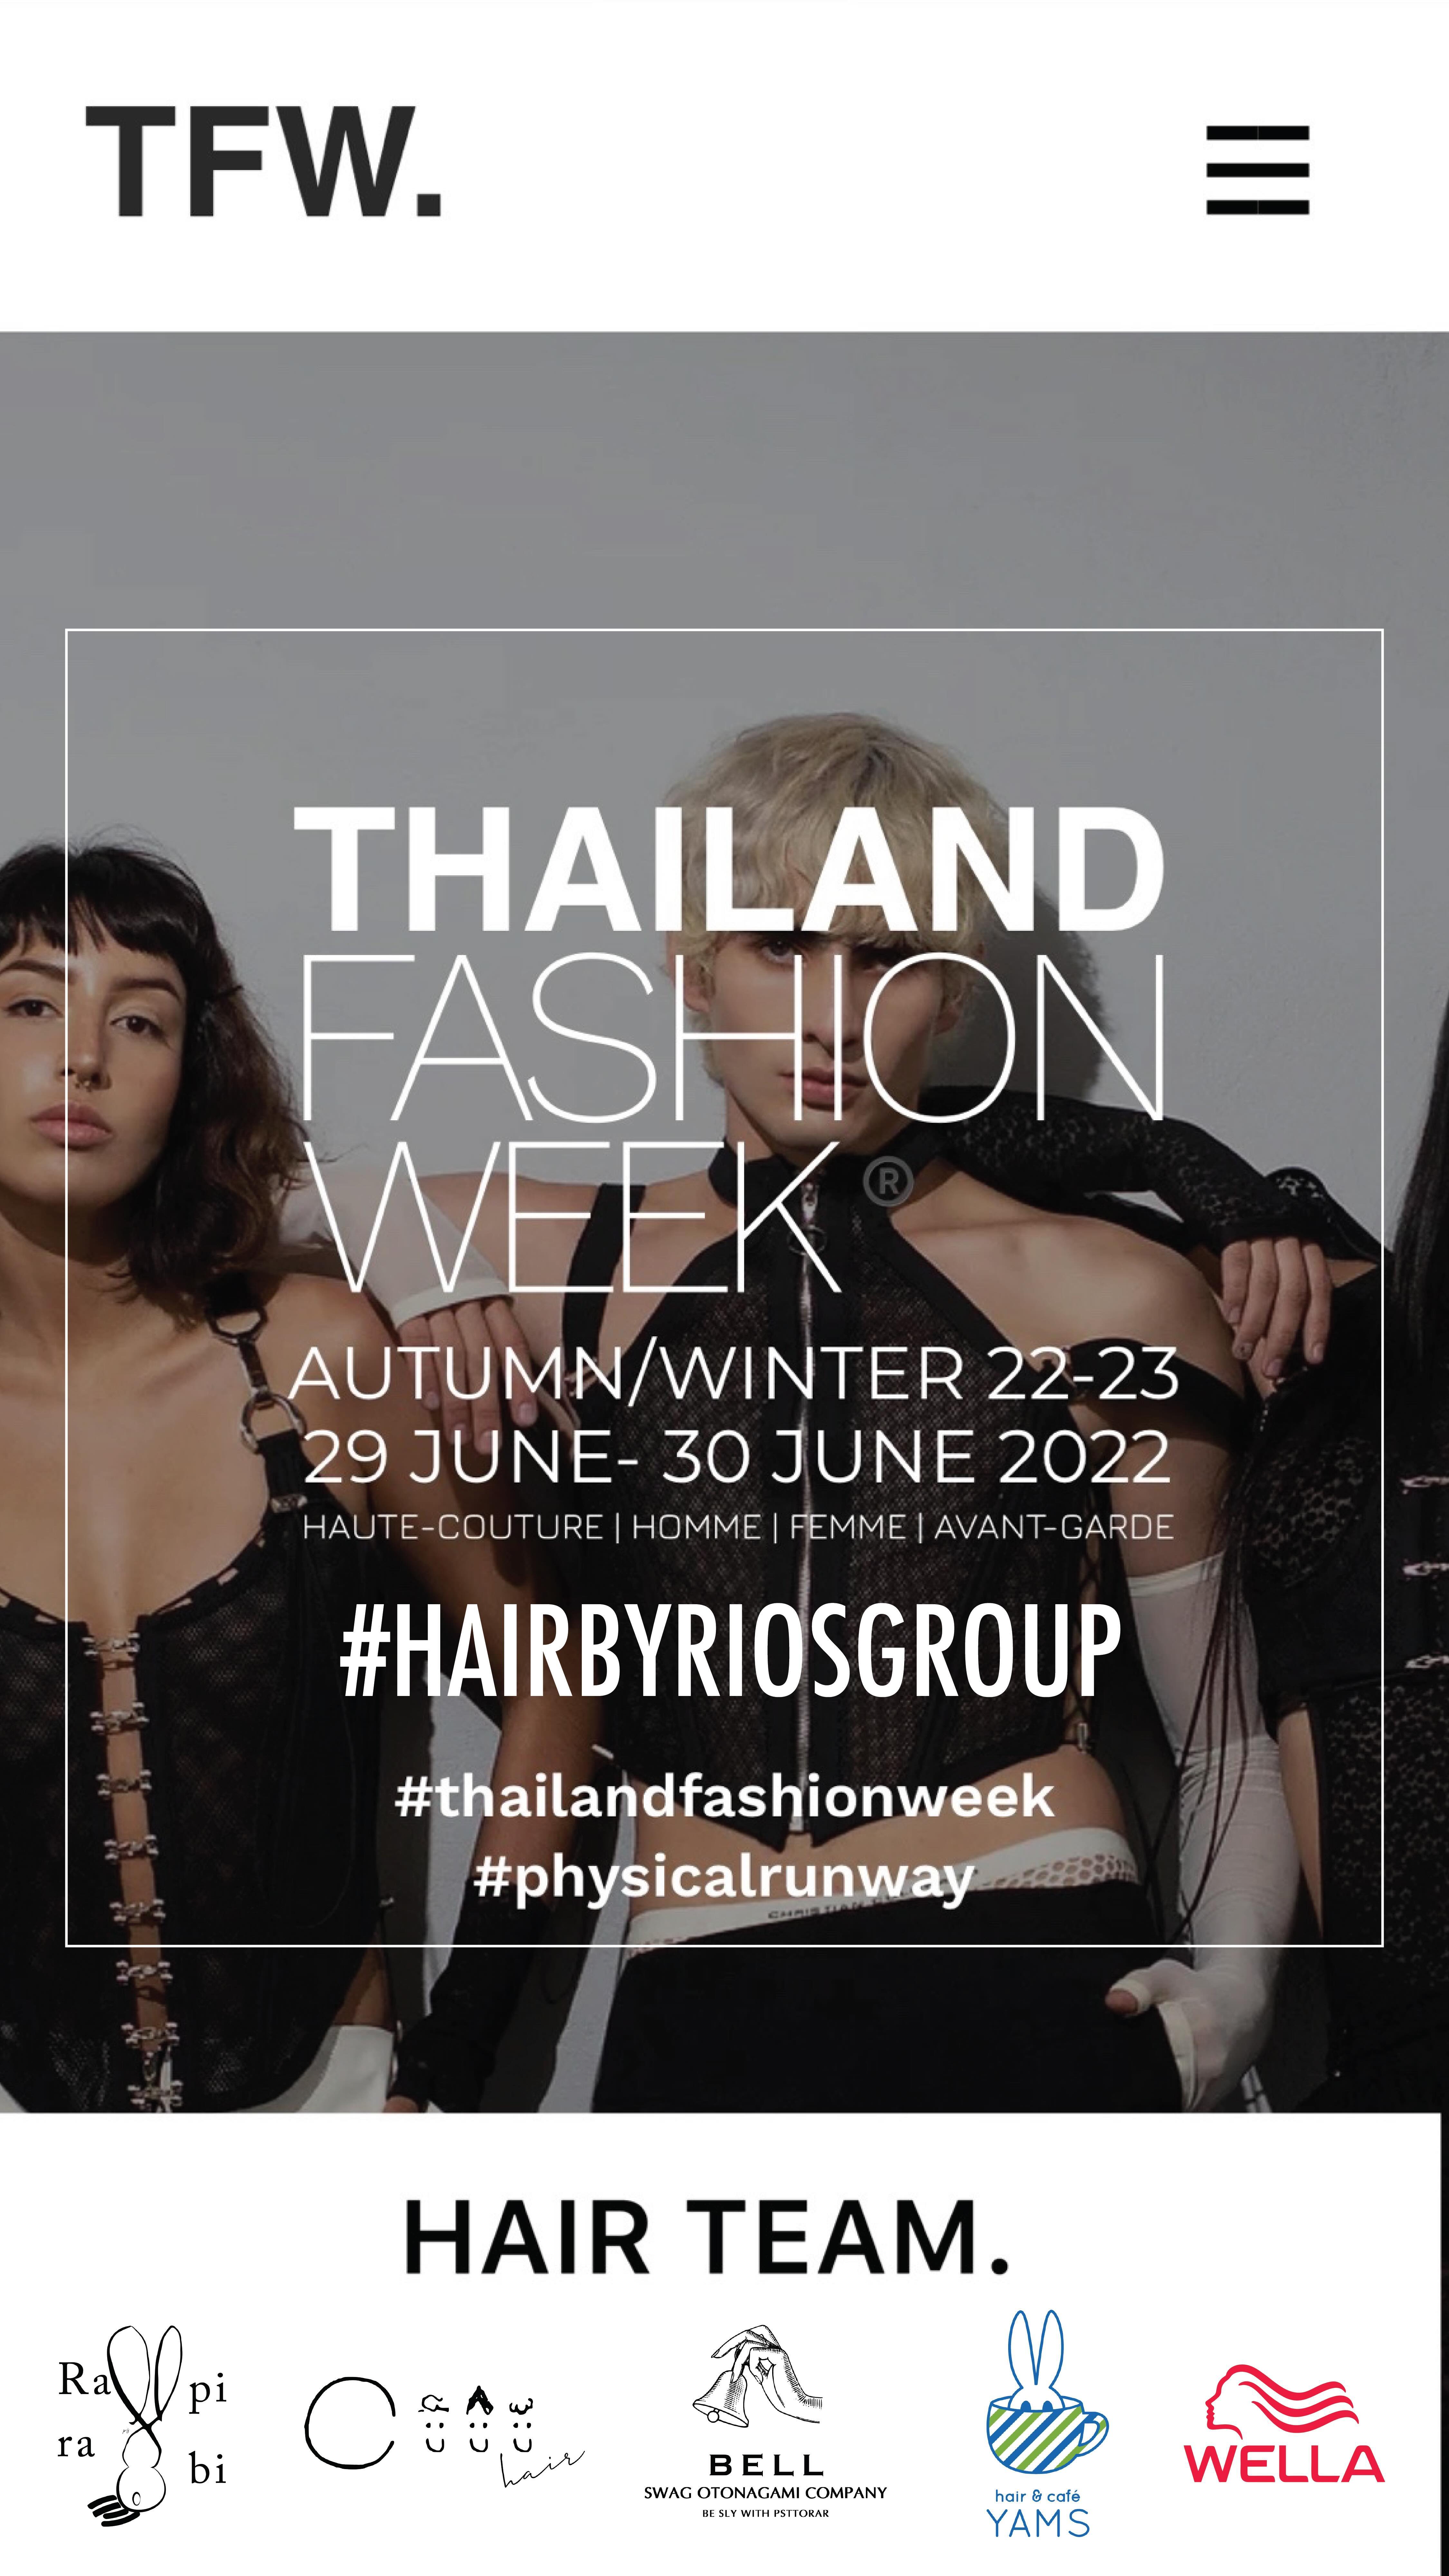 THAILAND FASHION WEEK AW 22-23
@thailandfashionweek  “ Behind The Scenes “  HAIR BY:
@bellotonagami 
@cuushair 
@yamshair 
@rapirabi.color  Products by:
@wellapro.thailand